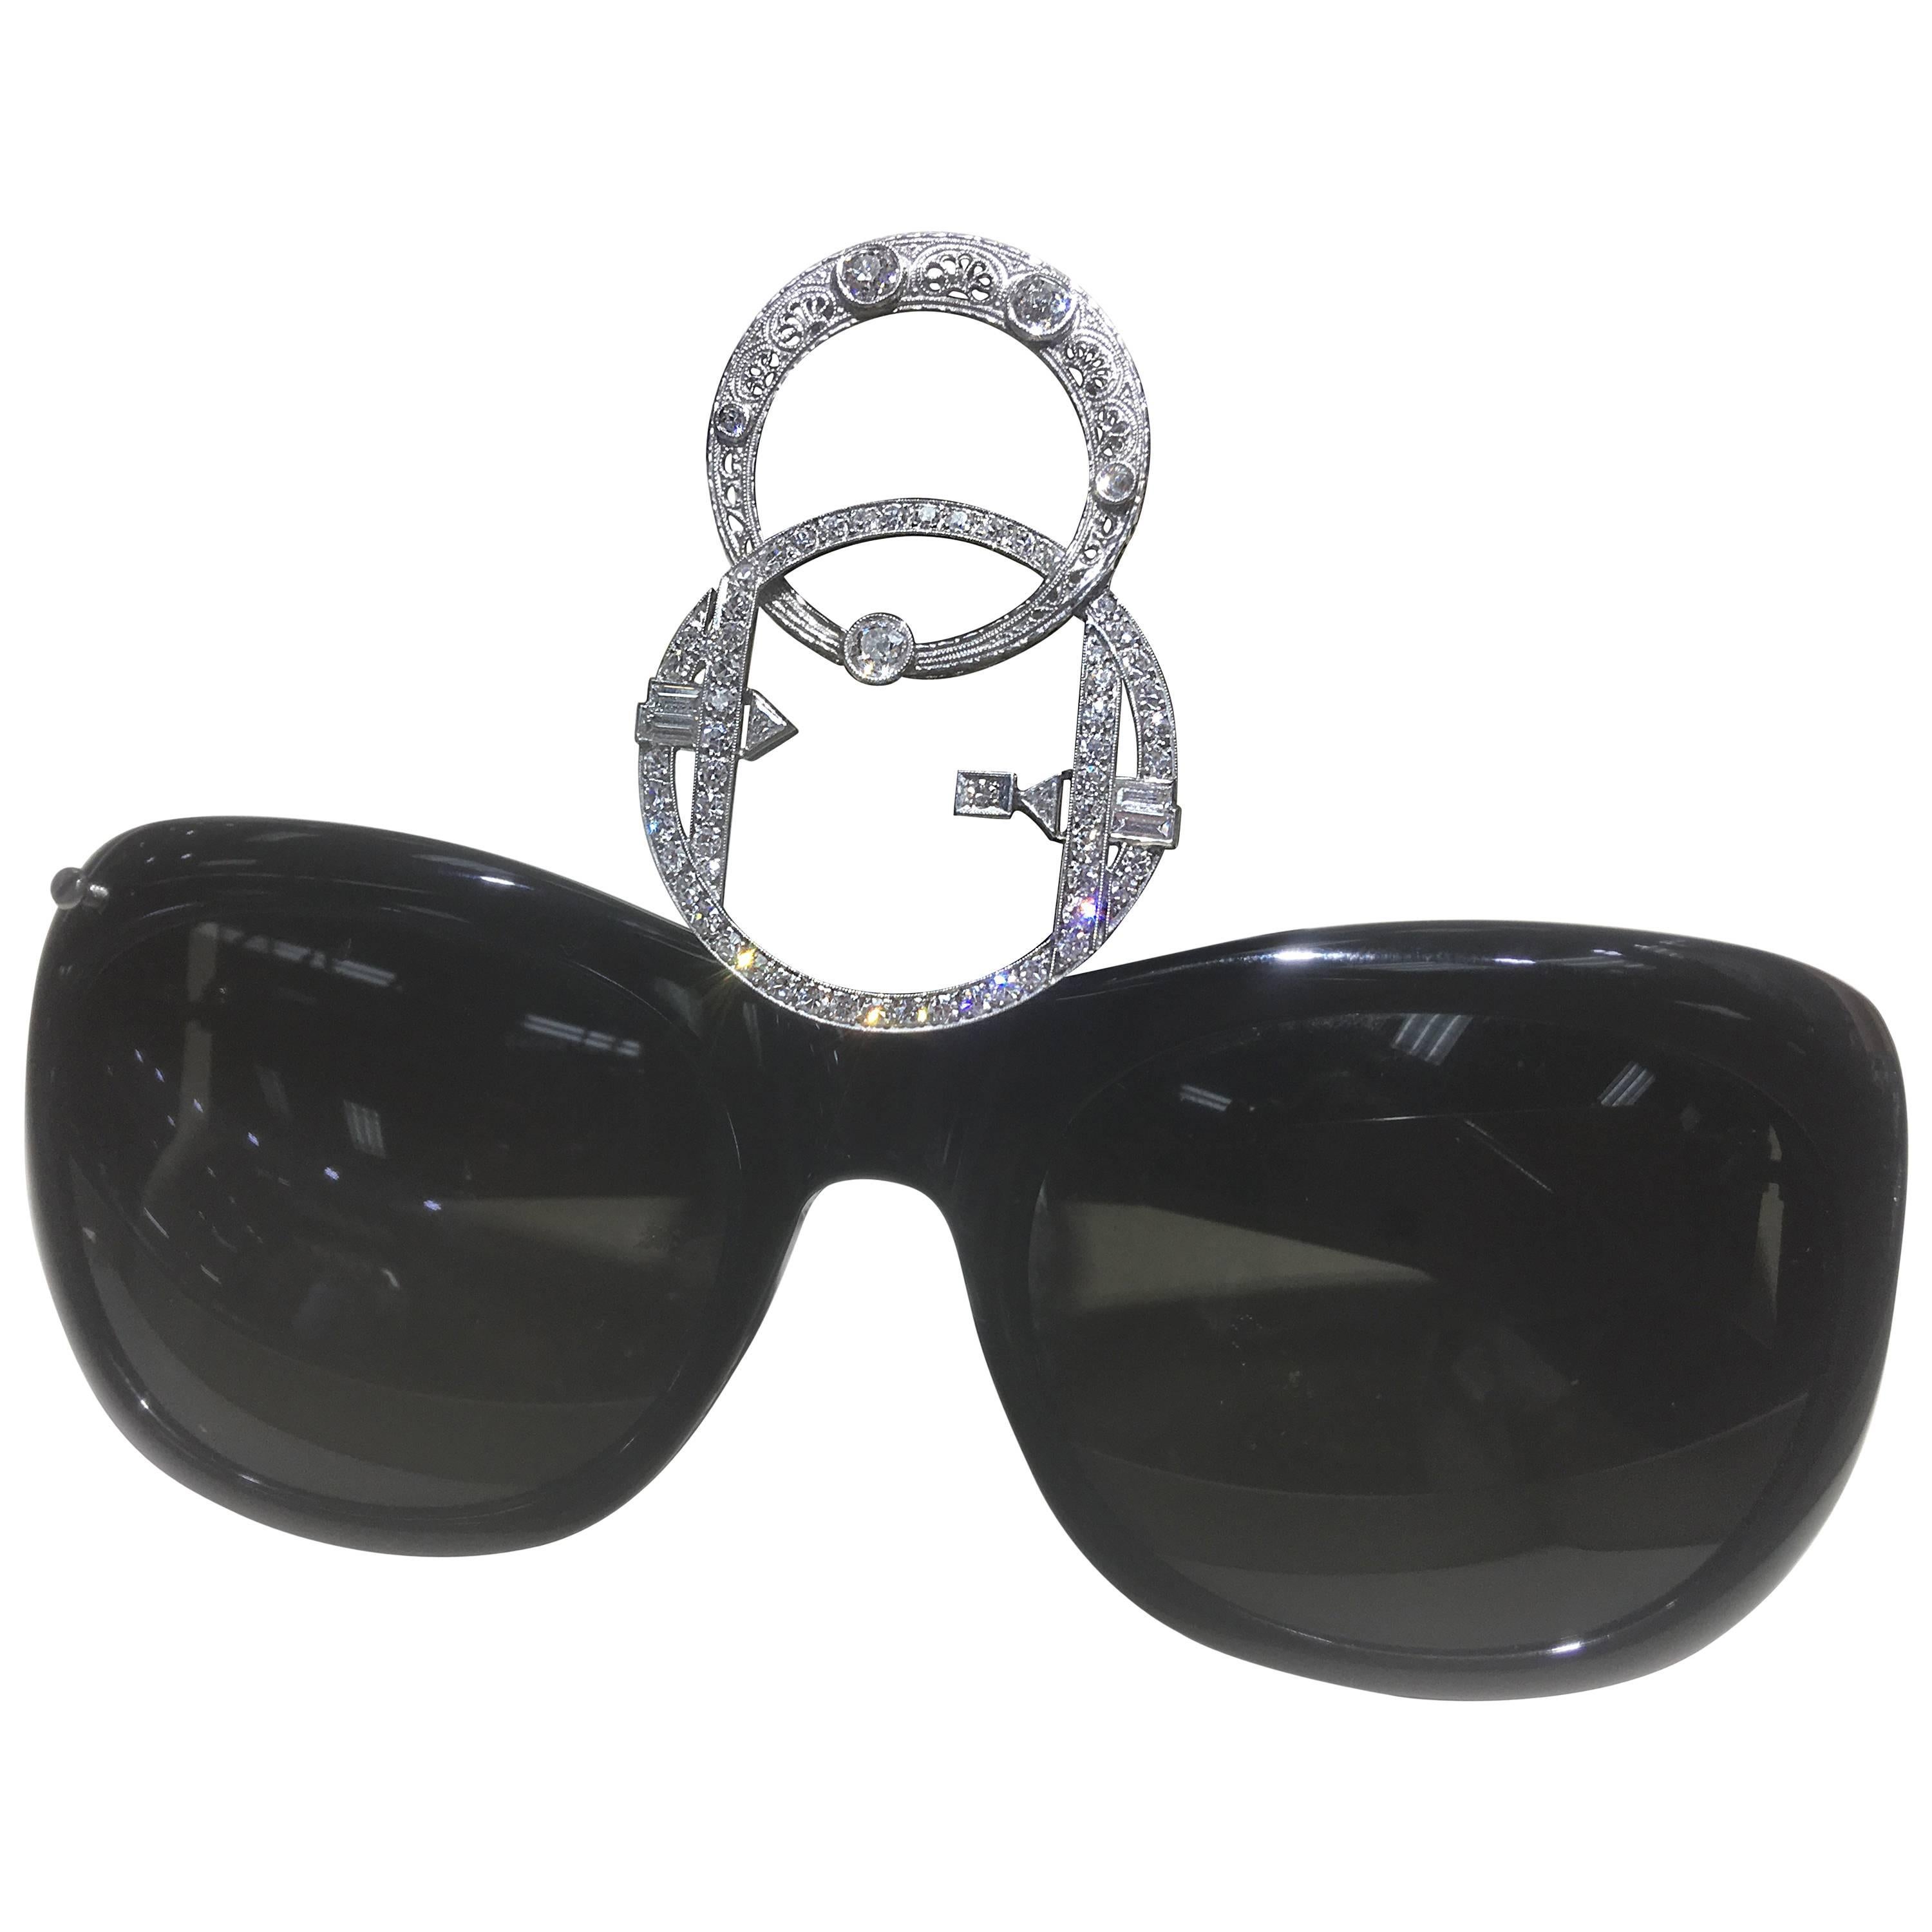 STACY ENGMAN ART ROYALTY - 2 Ct Diamond Sunglasses-Tiara In Platinum For Sale